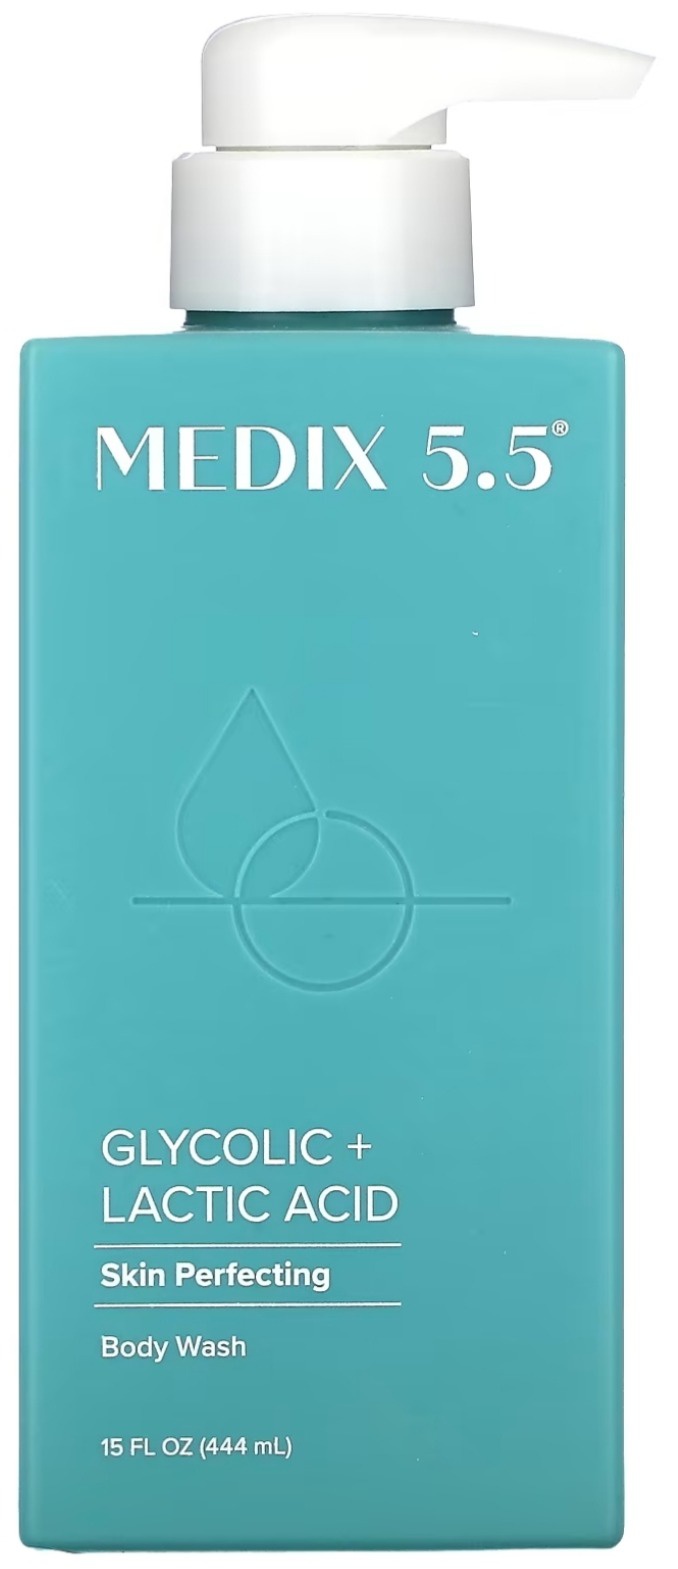 Medix 5.5 Glycolic + Lactic Acid Body Wash